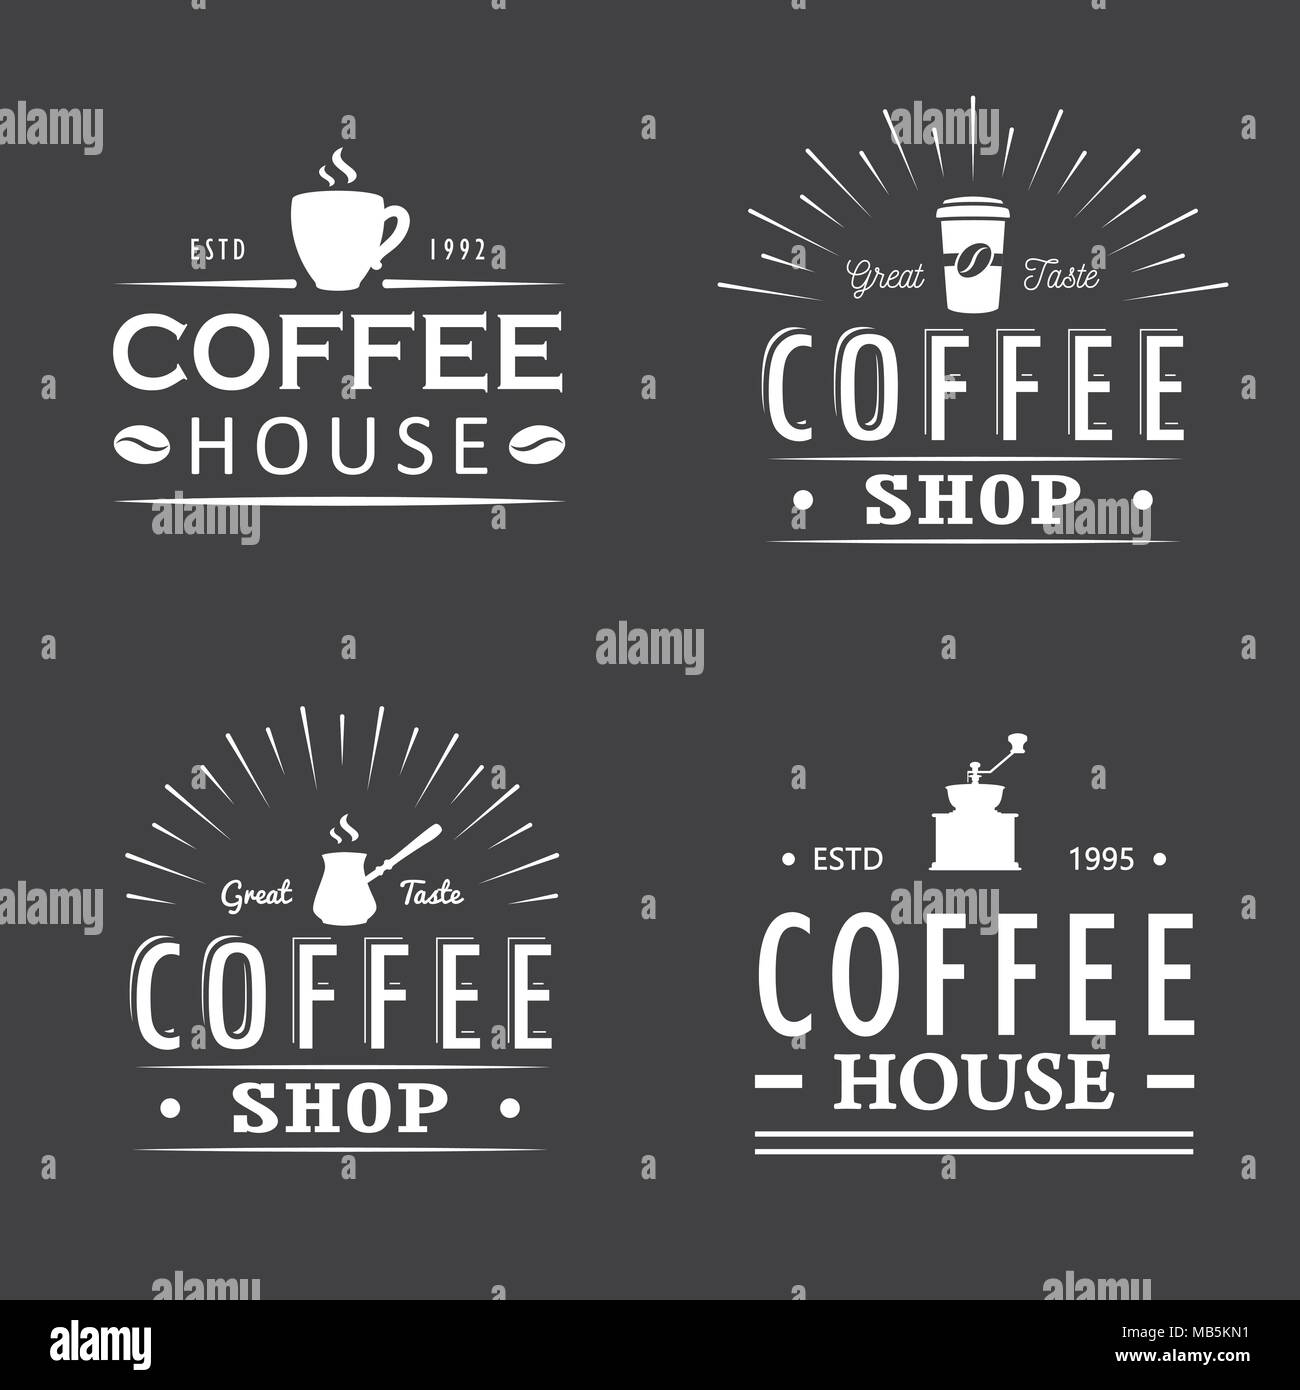 https://c8.alamy.com/comp/MB5KN1/set-of-vintage-coffee-logo-templates-badges-and-design-elements-logotypes-collection-for-coffee-shop-cafe-restaurant-vector-illustration-hipster-MB5KN1.jpg